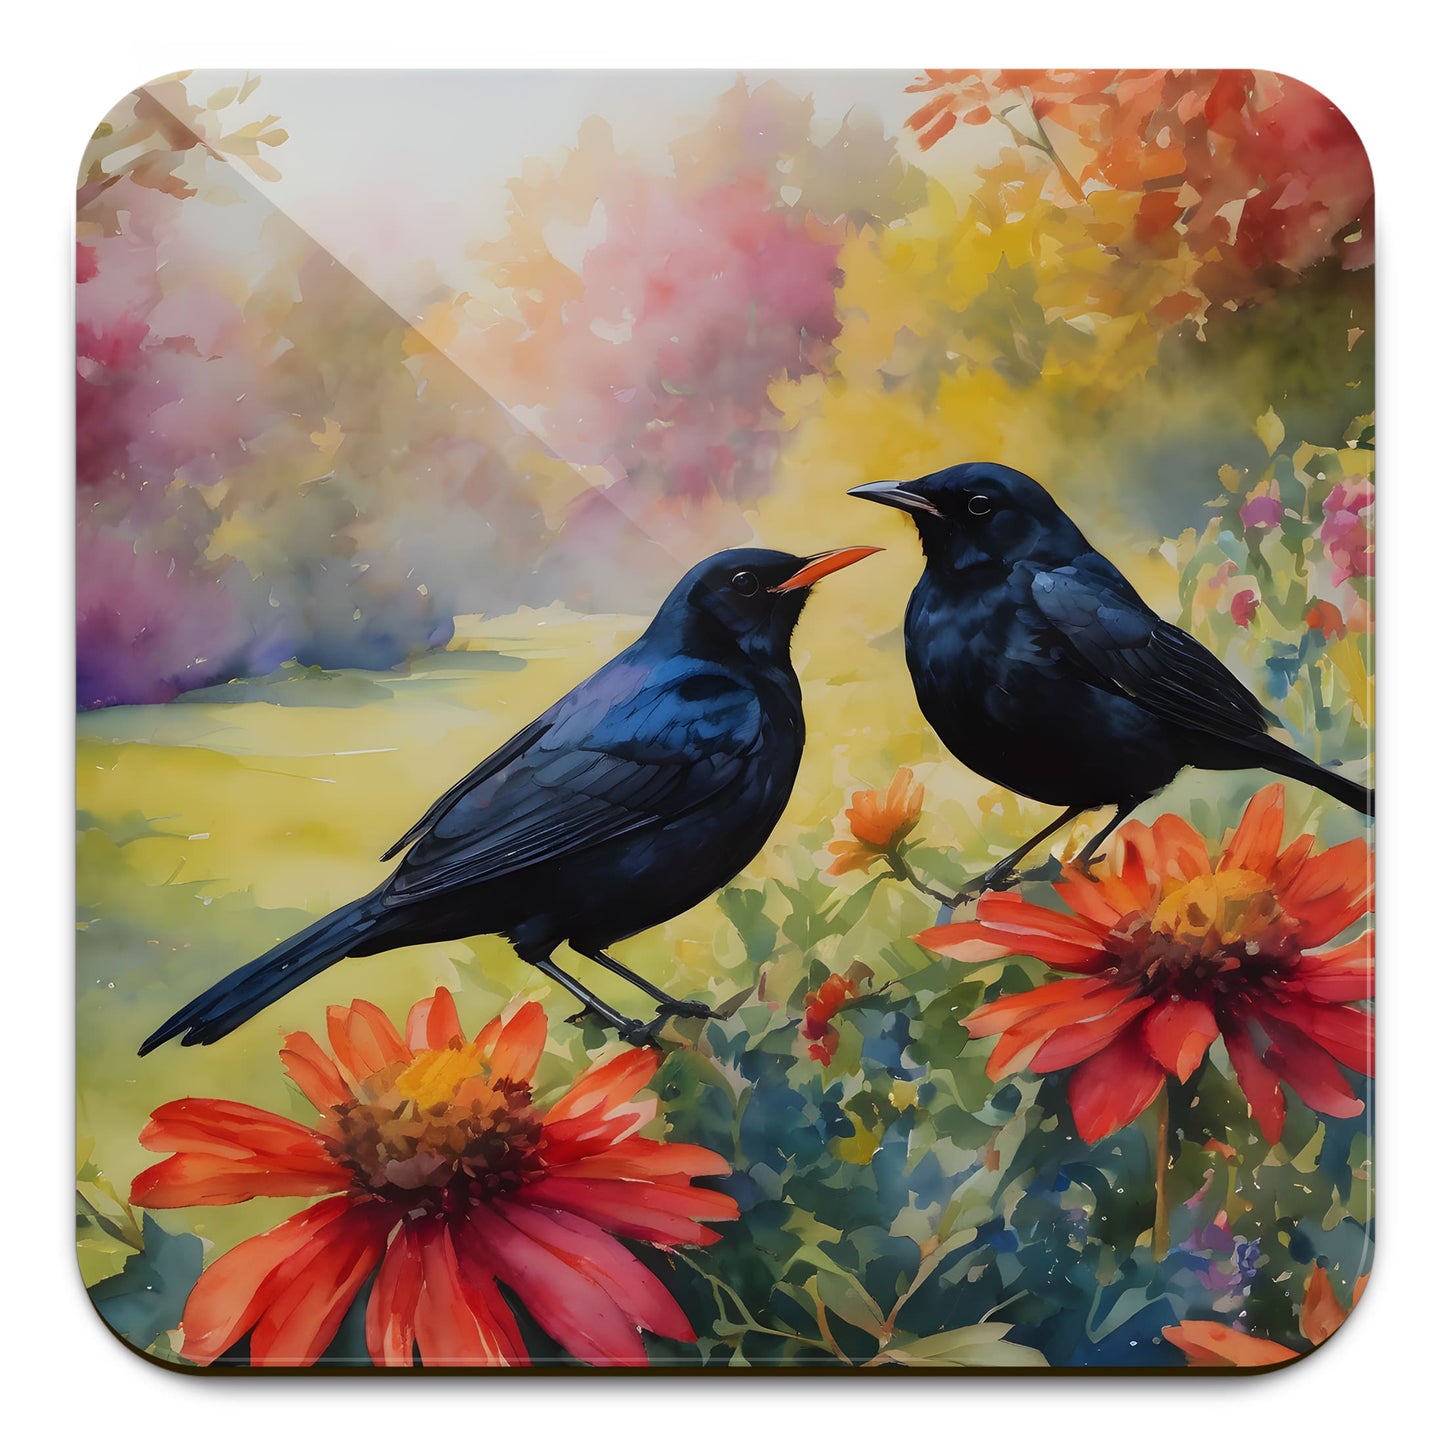 Watercolour British Bird Art 4 x Coaster Set 4 x Blackbirds Coaster